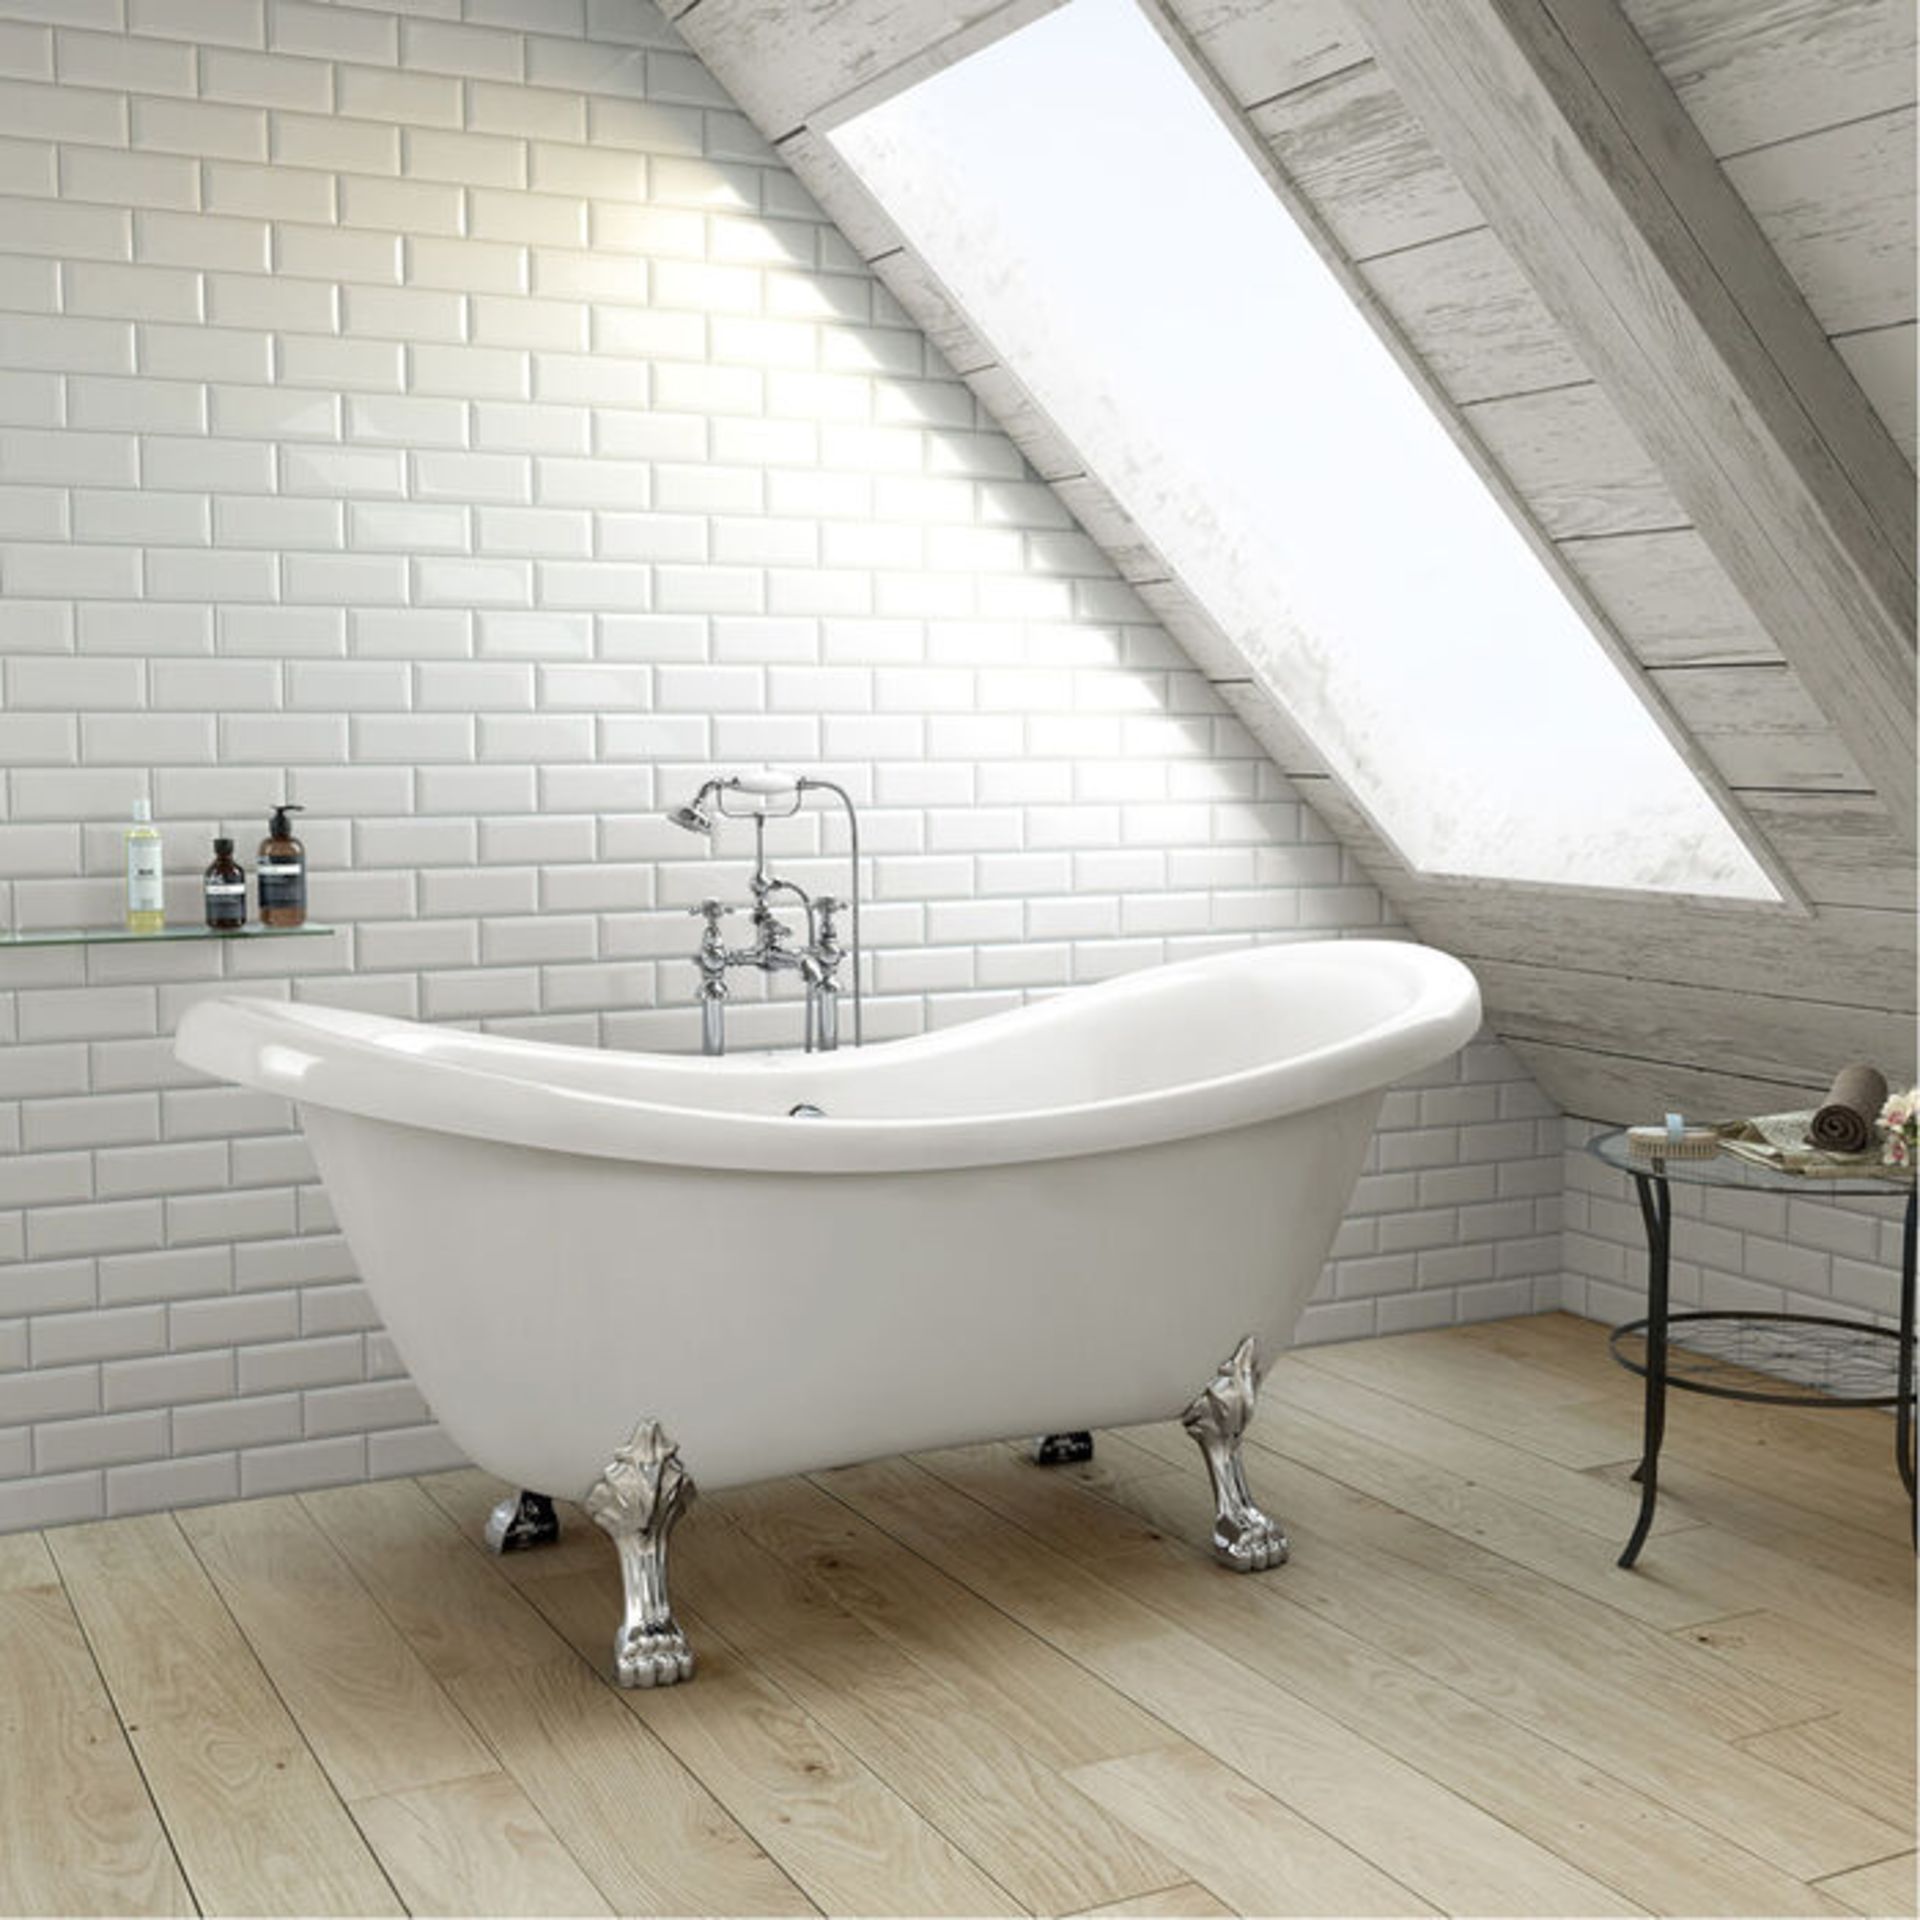 (TT5) 1600mm Cambridge Traditional Roll Top Double Slipper Bath - Dragon Feet. RRP £699.99. Ba... - Image 3 of 4